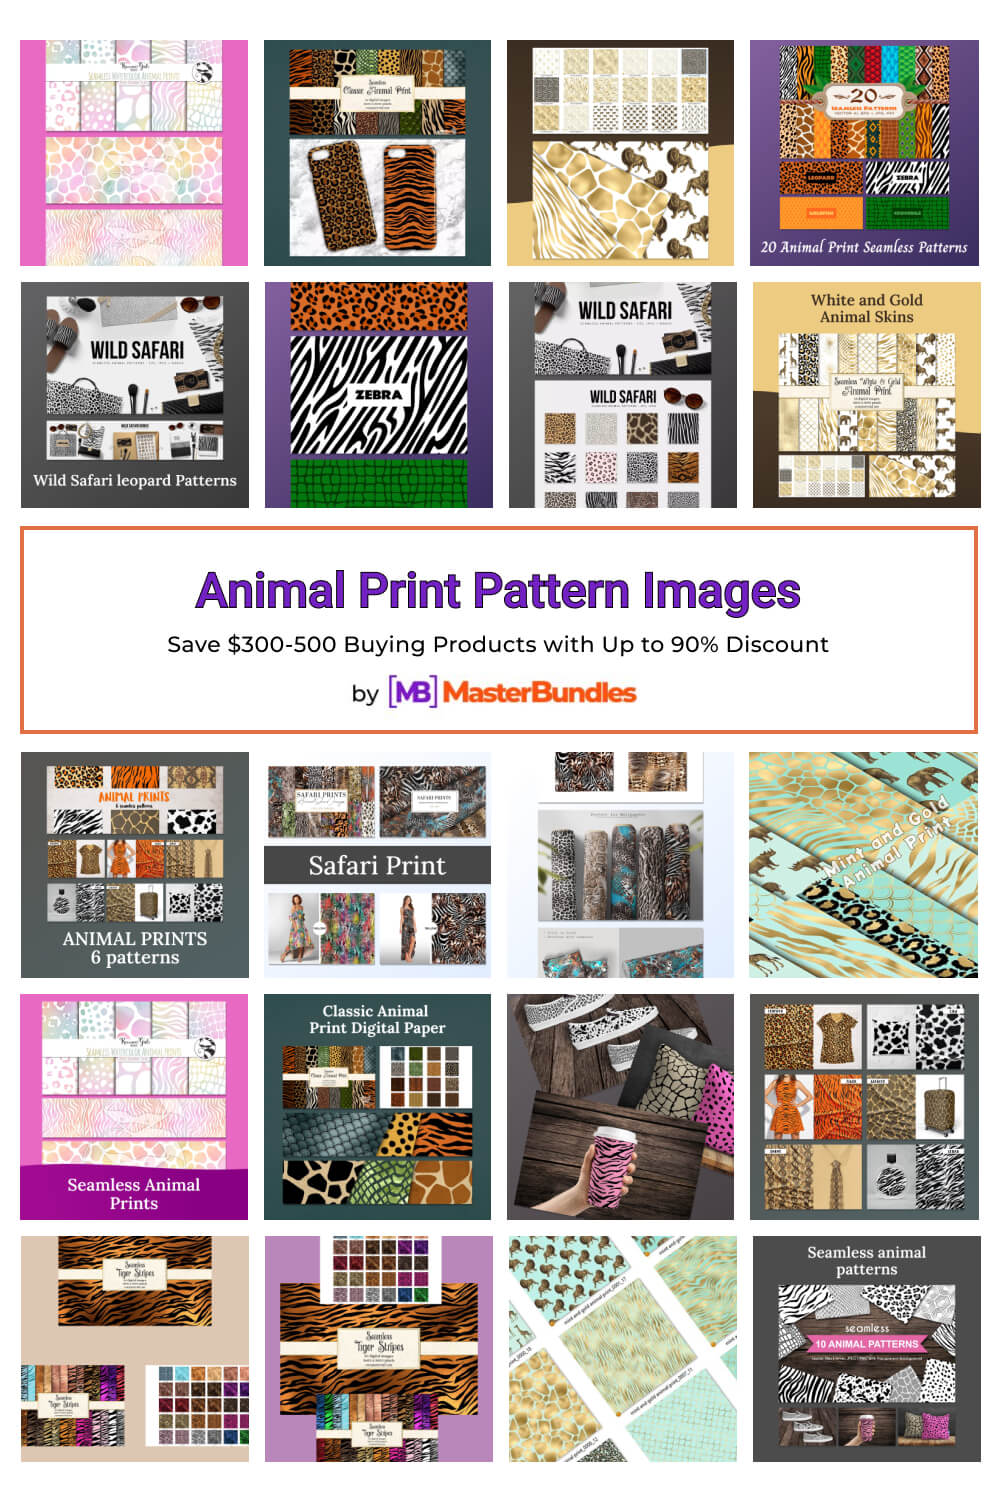 animal print pattern images pinterest image.